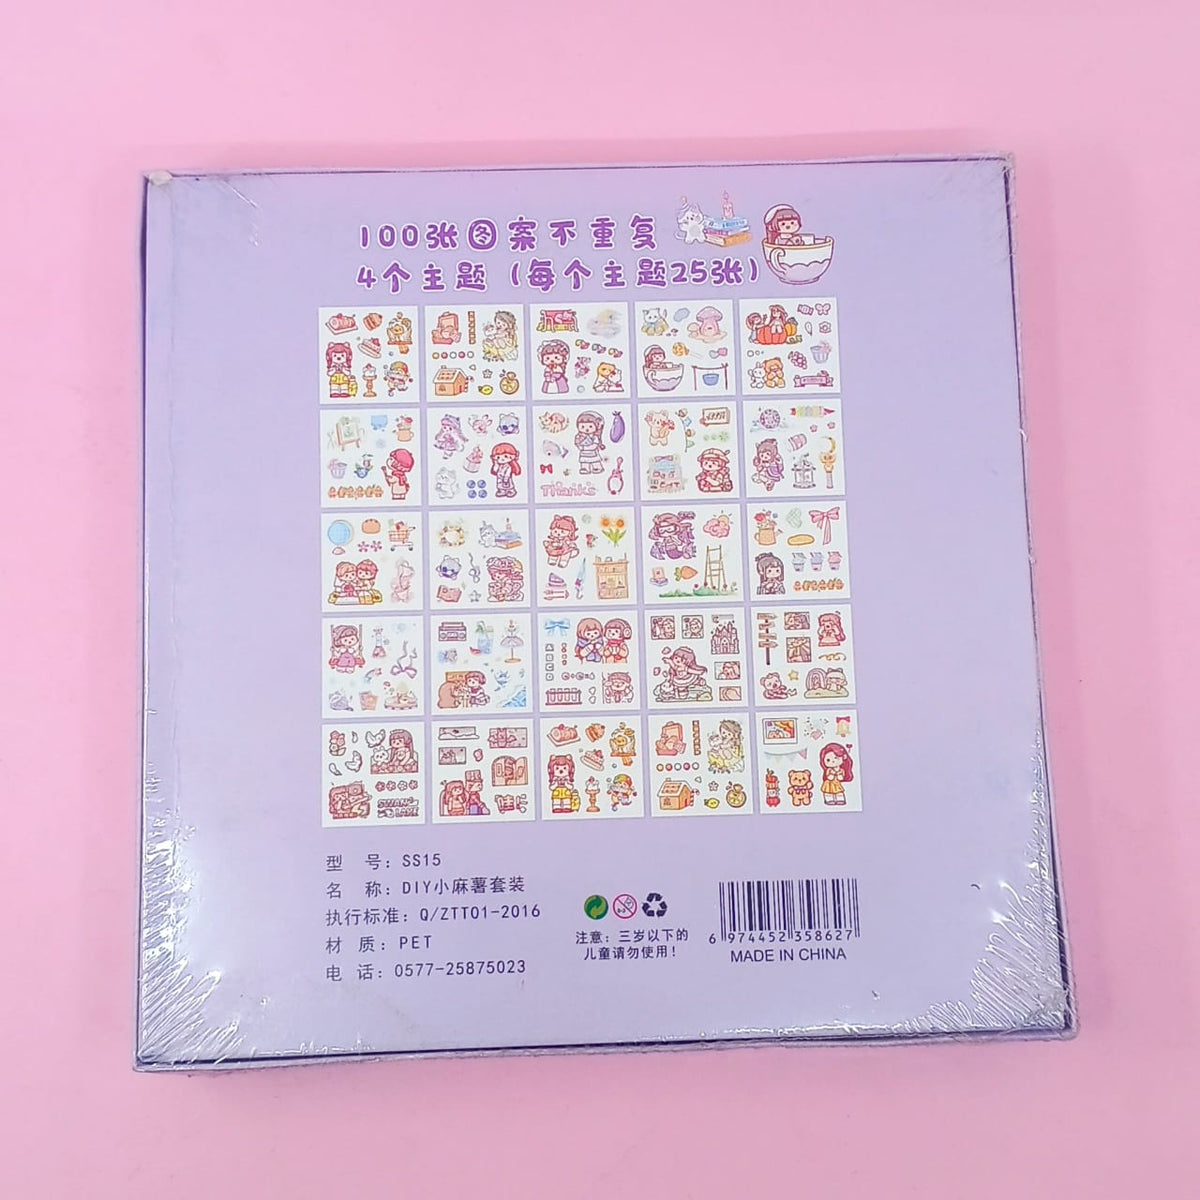 Kawaii Sticker Set Of 100 Sheets - Style 2